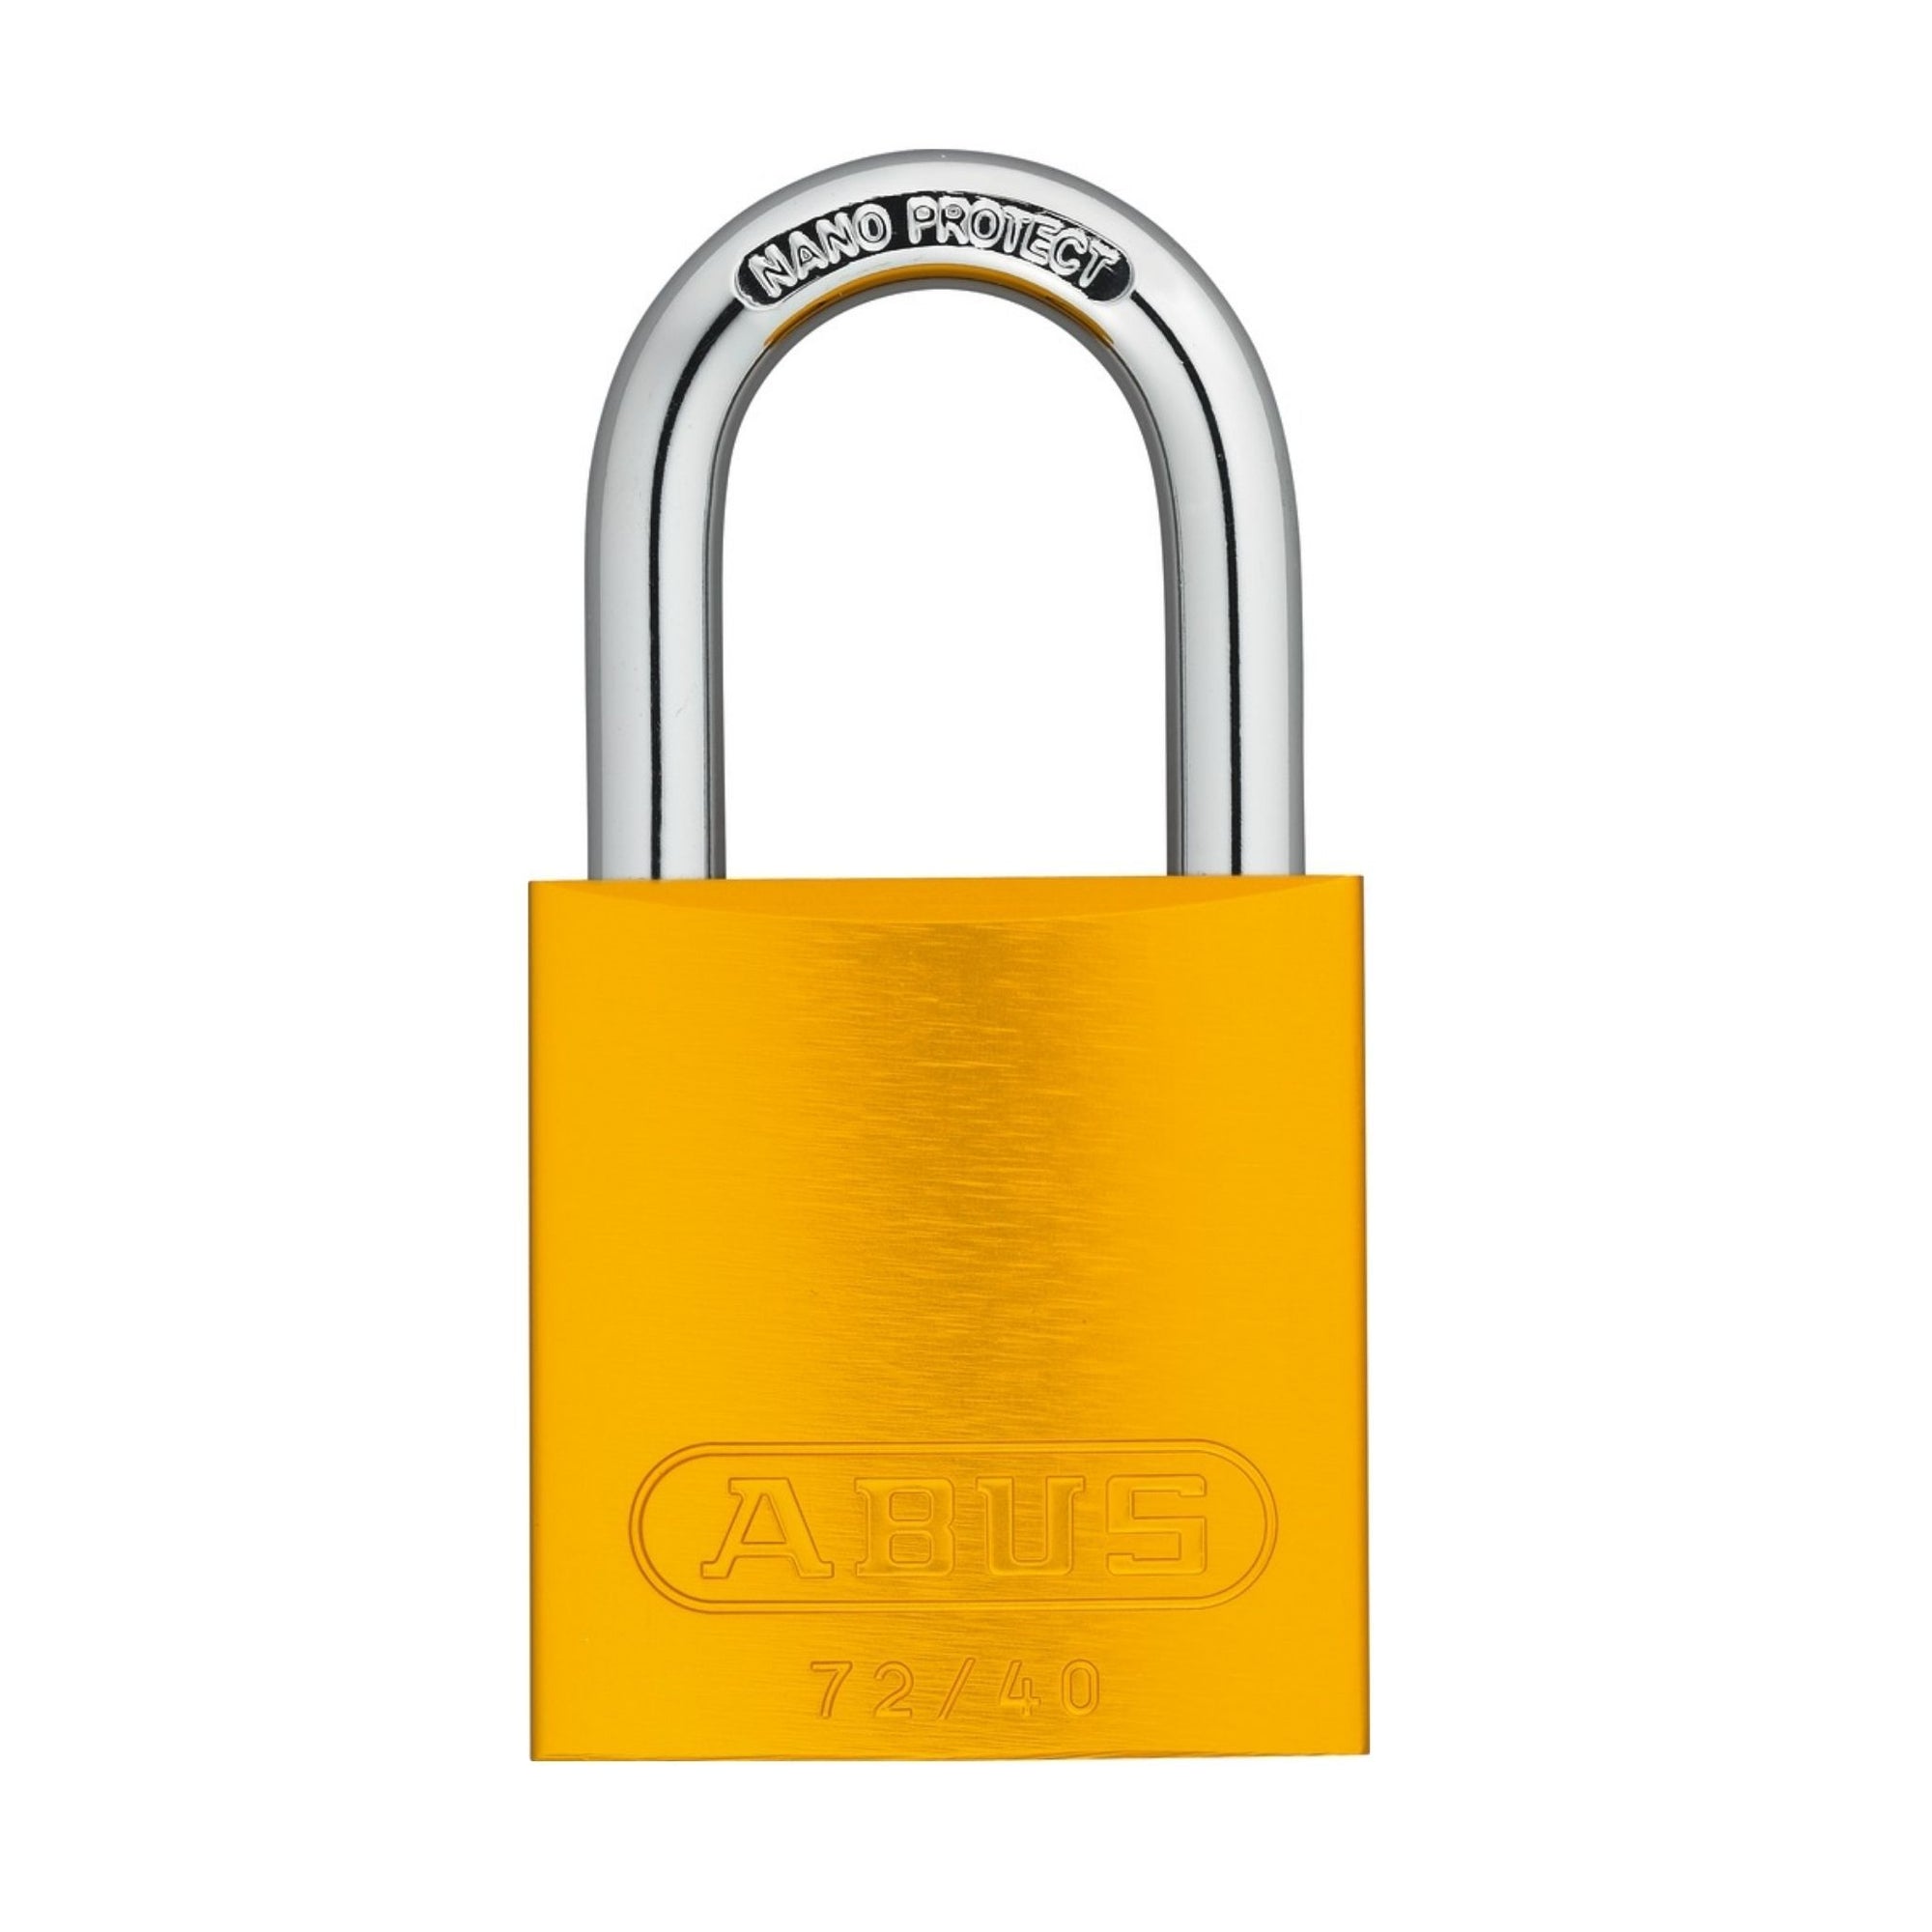 Abus 72/40 KA TT00036 Yellow Titalium Safety Padlock with 1-Inch Shackle, Keyed Alike to Match Existing Key Number KATT00036 - The Lock Source 